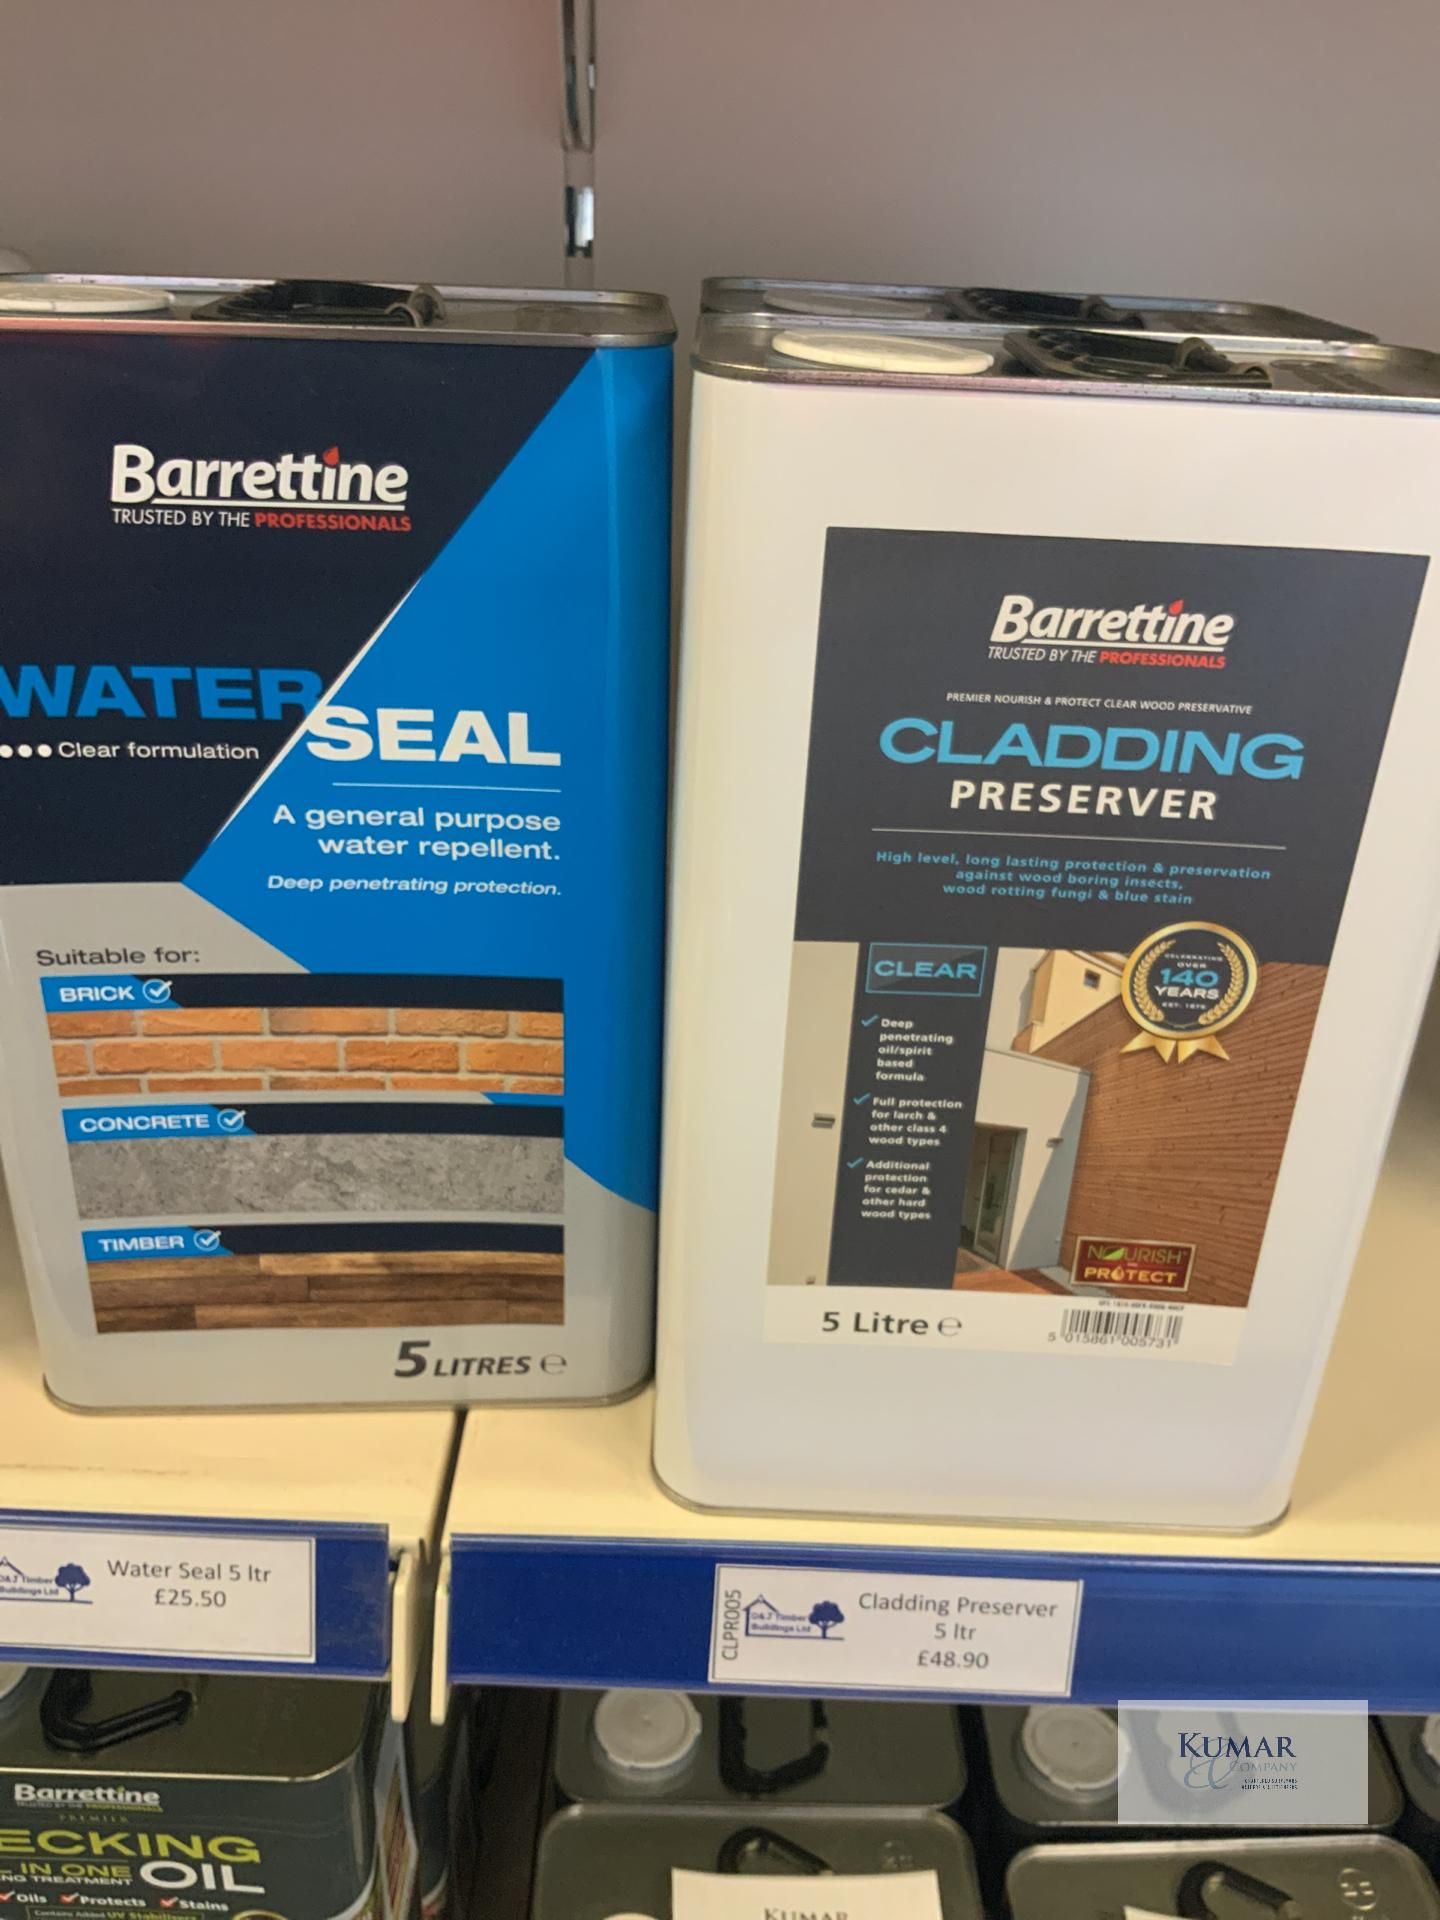 1: Barrattine Water Seal (RRP £25.50) 2: Barrattine Cladding Preserver (RRP £48.90 each)